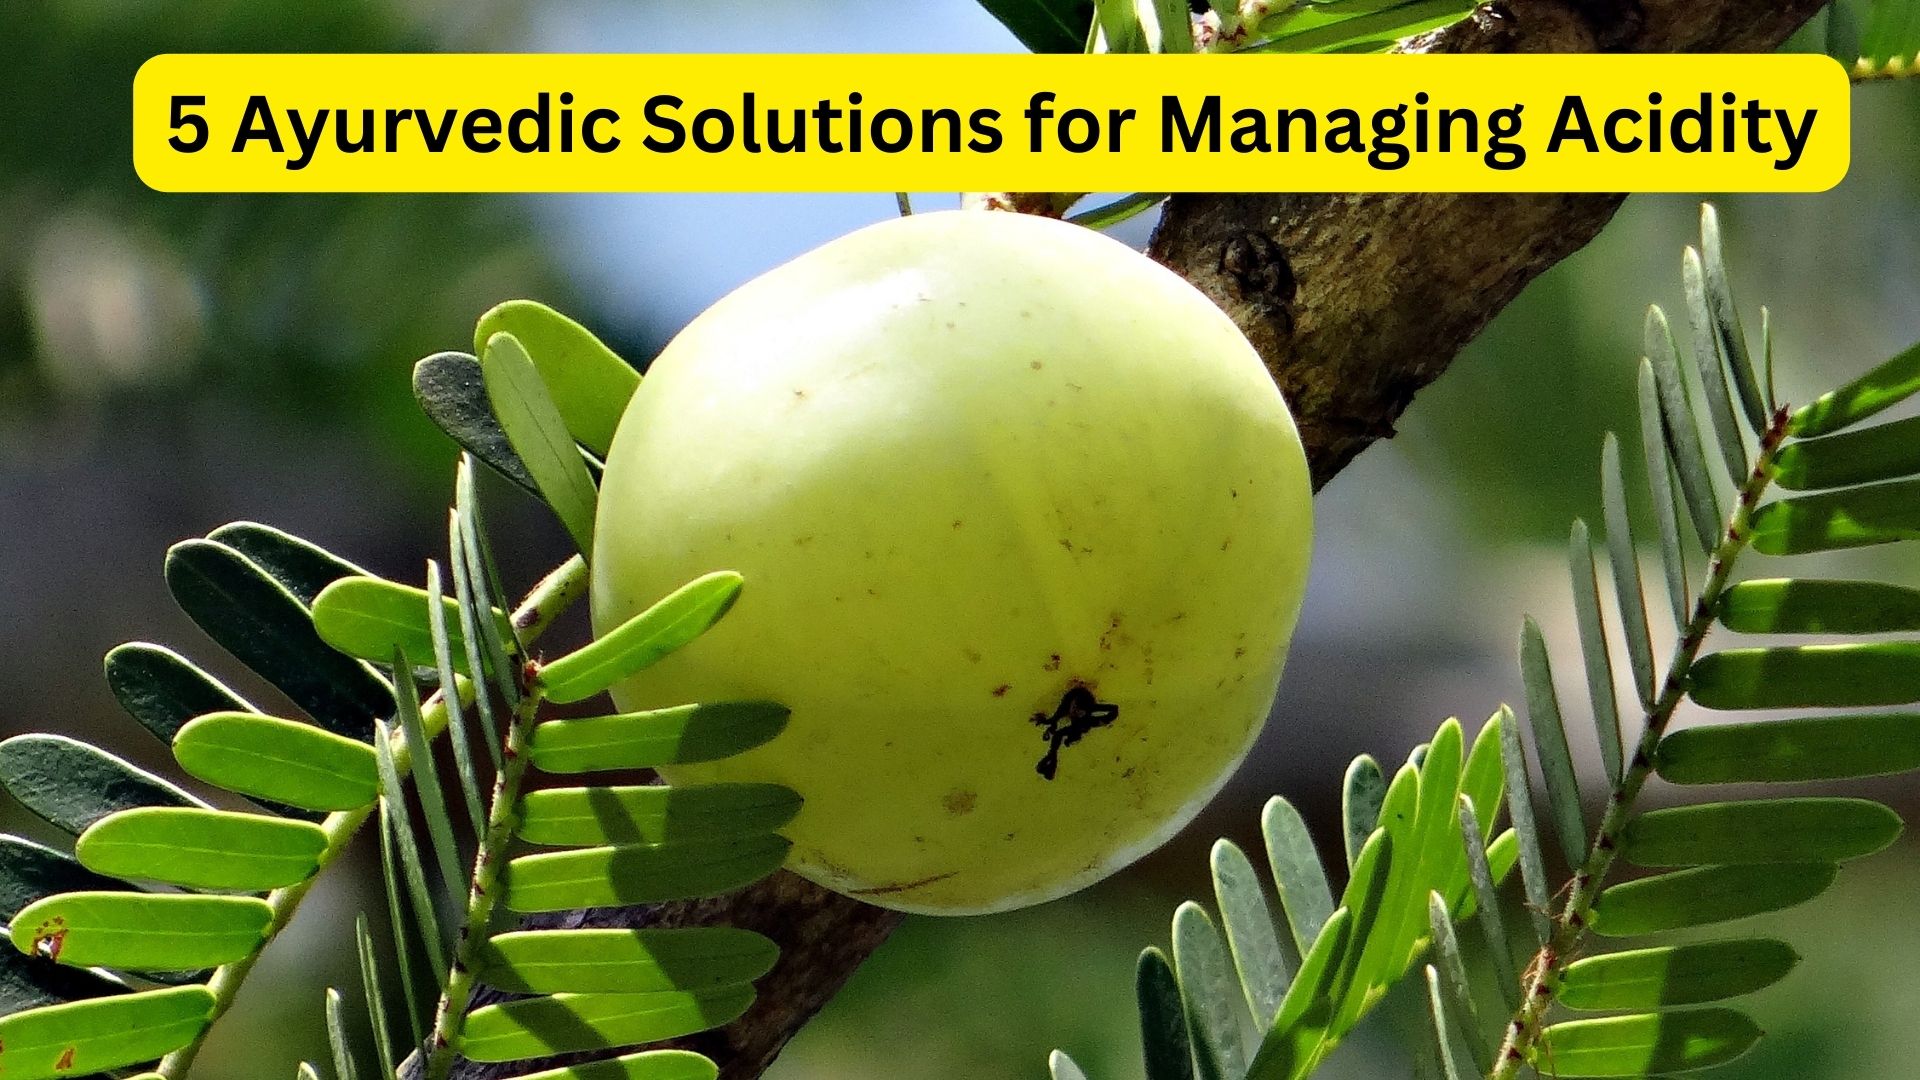 5 Ayurvedic Solutions for Managing Acidity